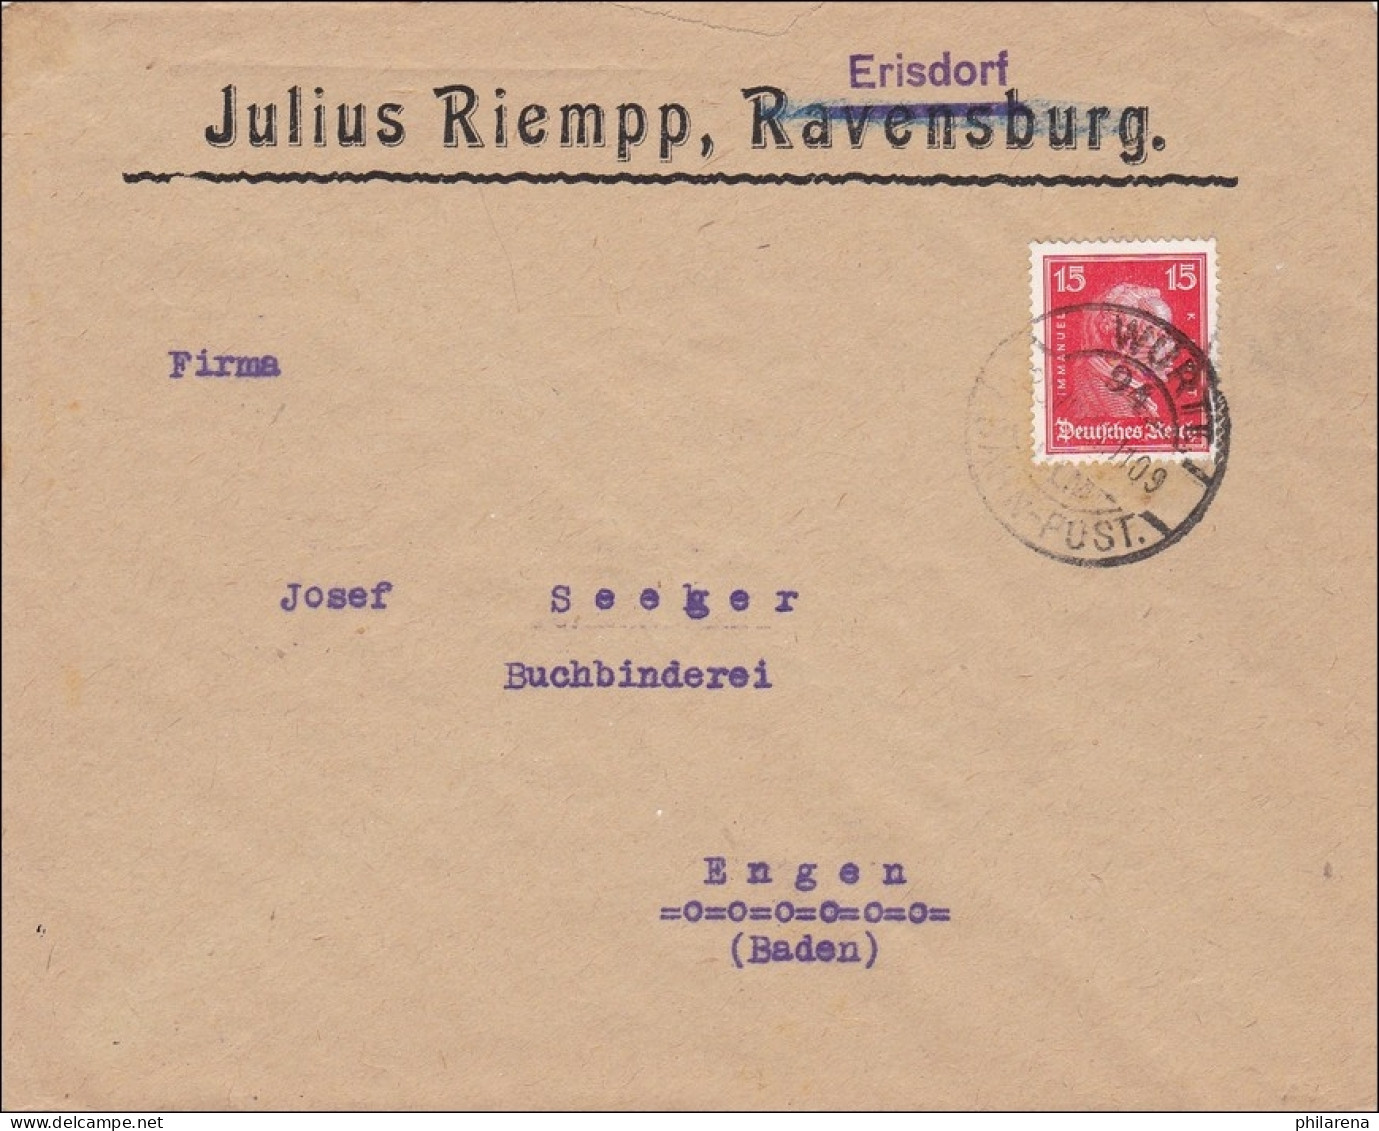 Bahnpost: Brief Aus Erisdorf/Ravensburg Mit Bahnpost Stempel 1909 - Covers & Documents